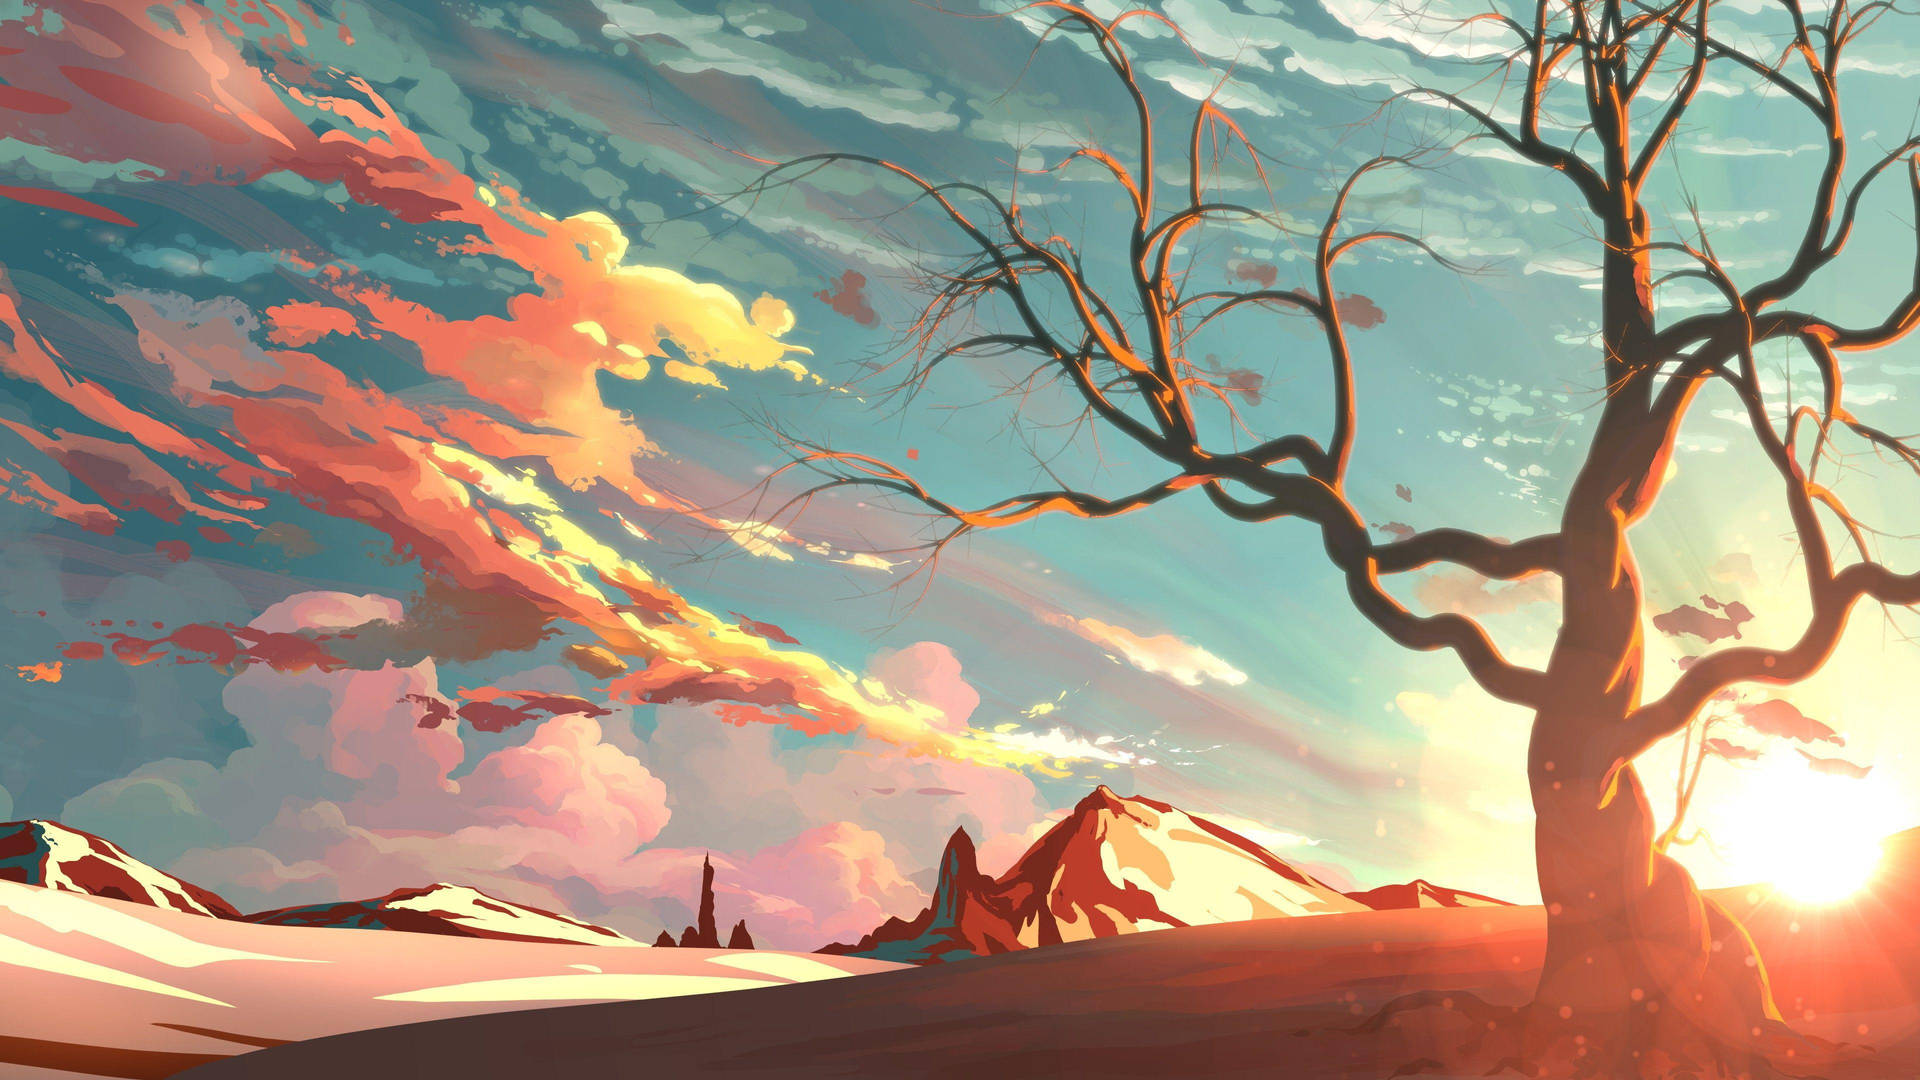 Dead Tree And Sunrise Digital Art Wallpaper